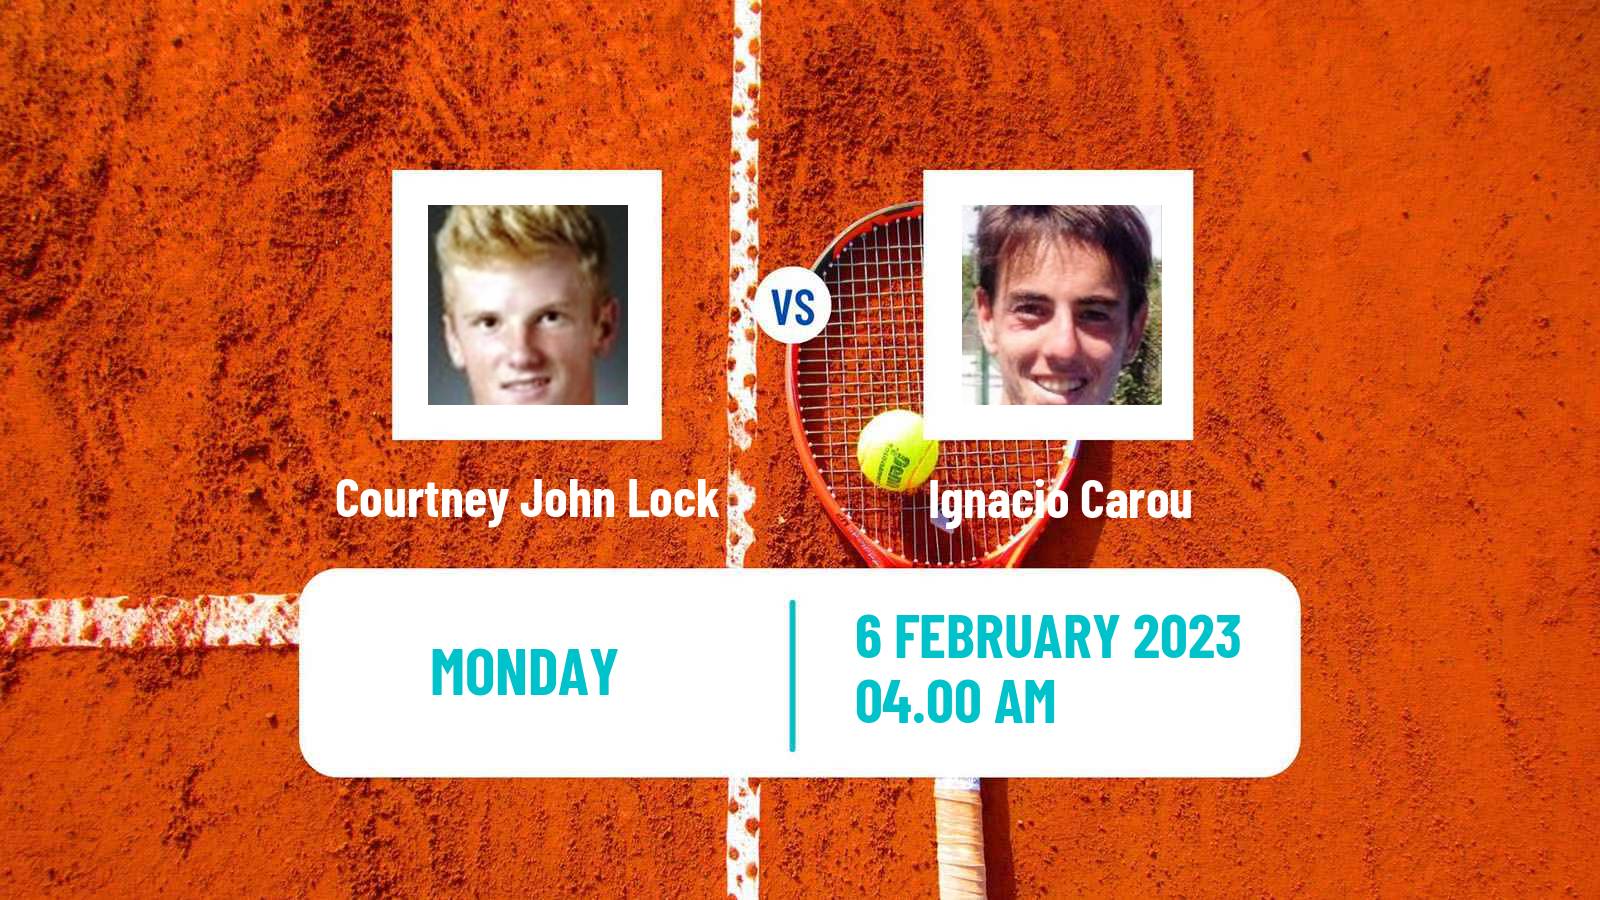 Tennis Davis Cup World Group II Courtney John Lock - Ignacio Carou